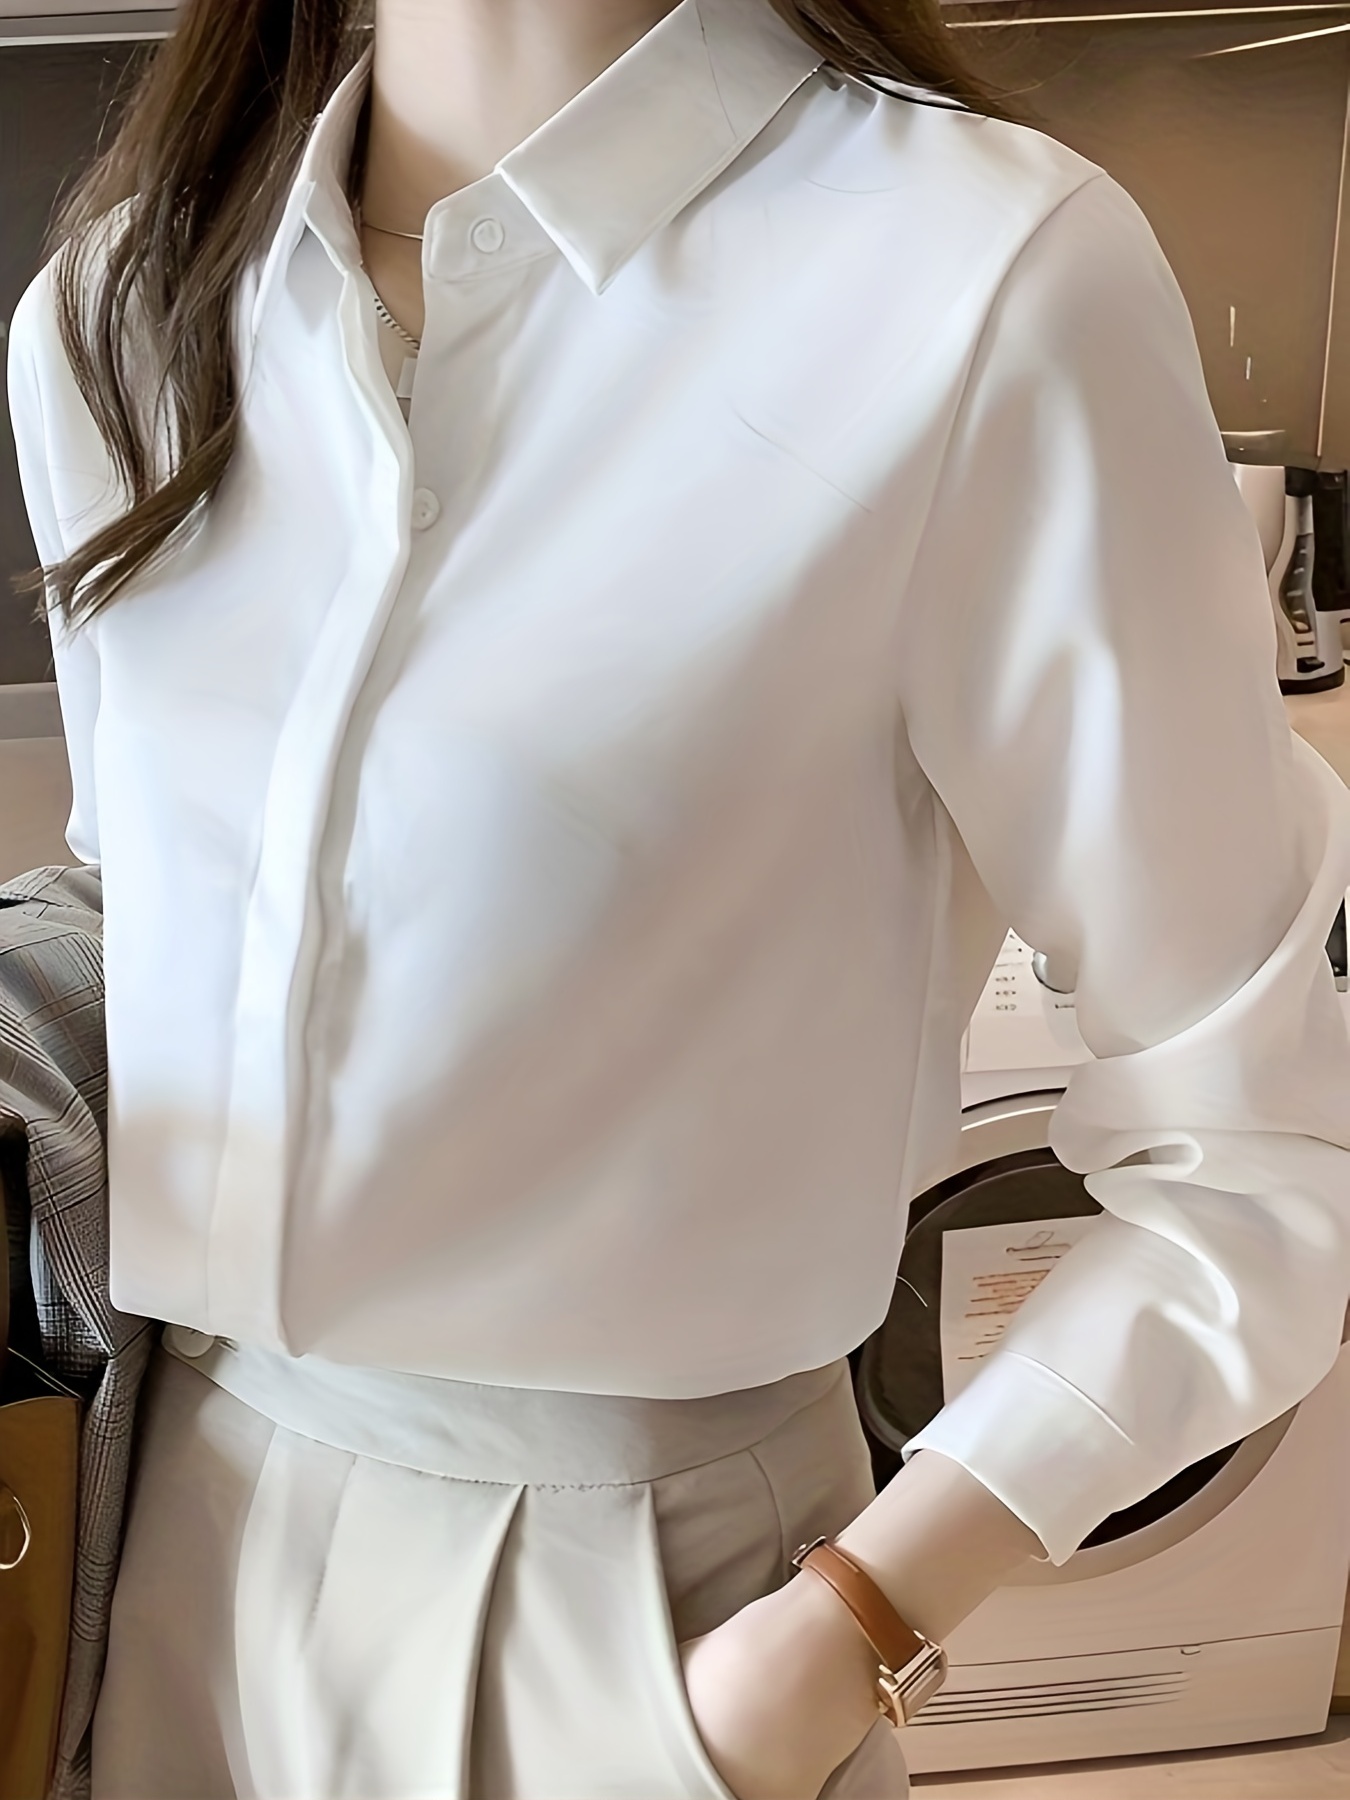 Camisa de Vestir Blanca para Caballero, Corte Slim fit. (2-3/14.5